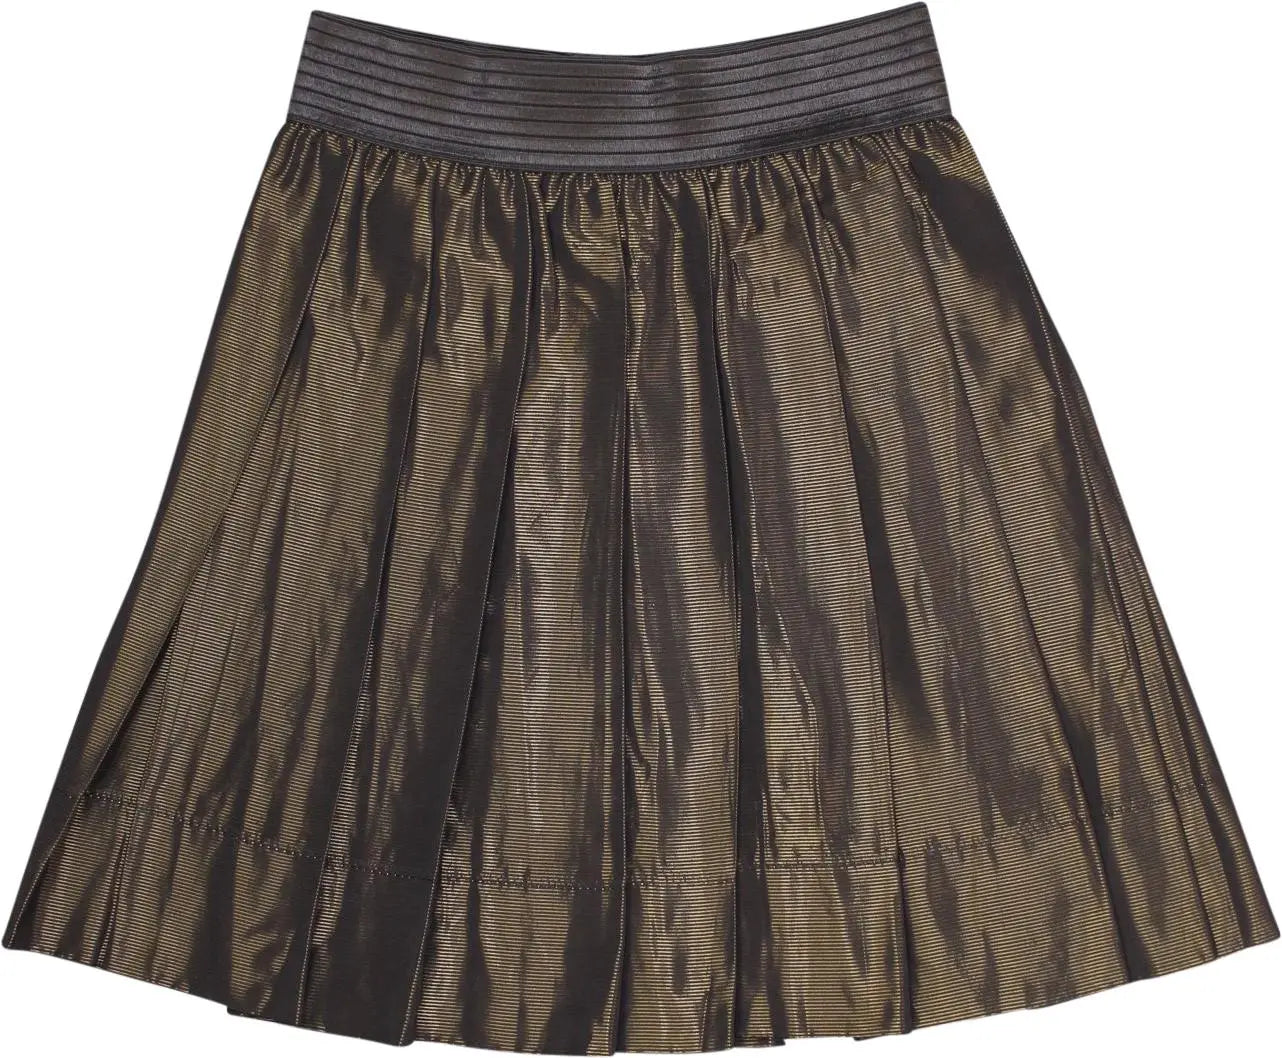 Unikat - Gold Skater Skirt- ThriftTale.com - Vintage and second handclothing